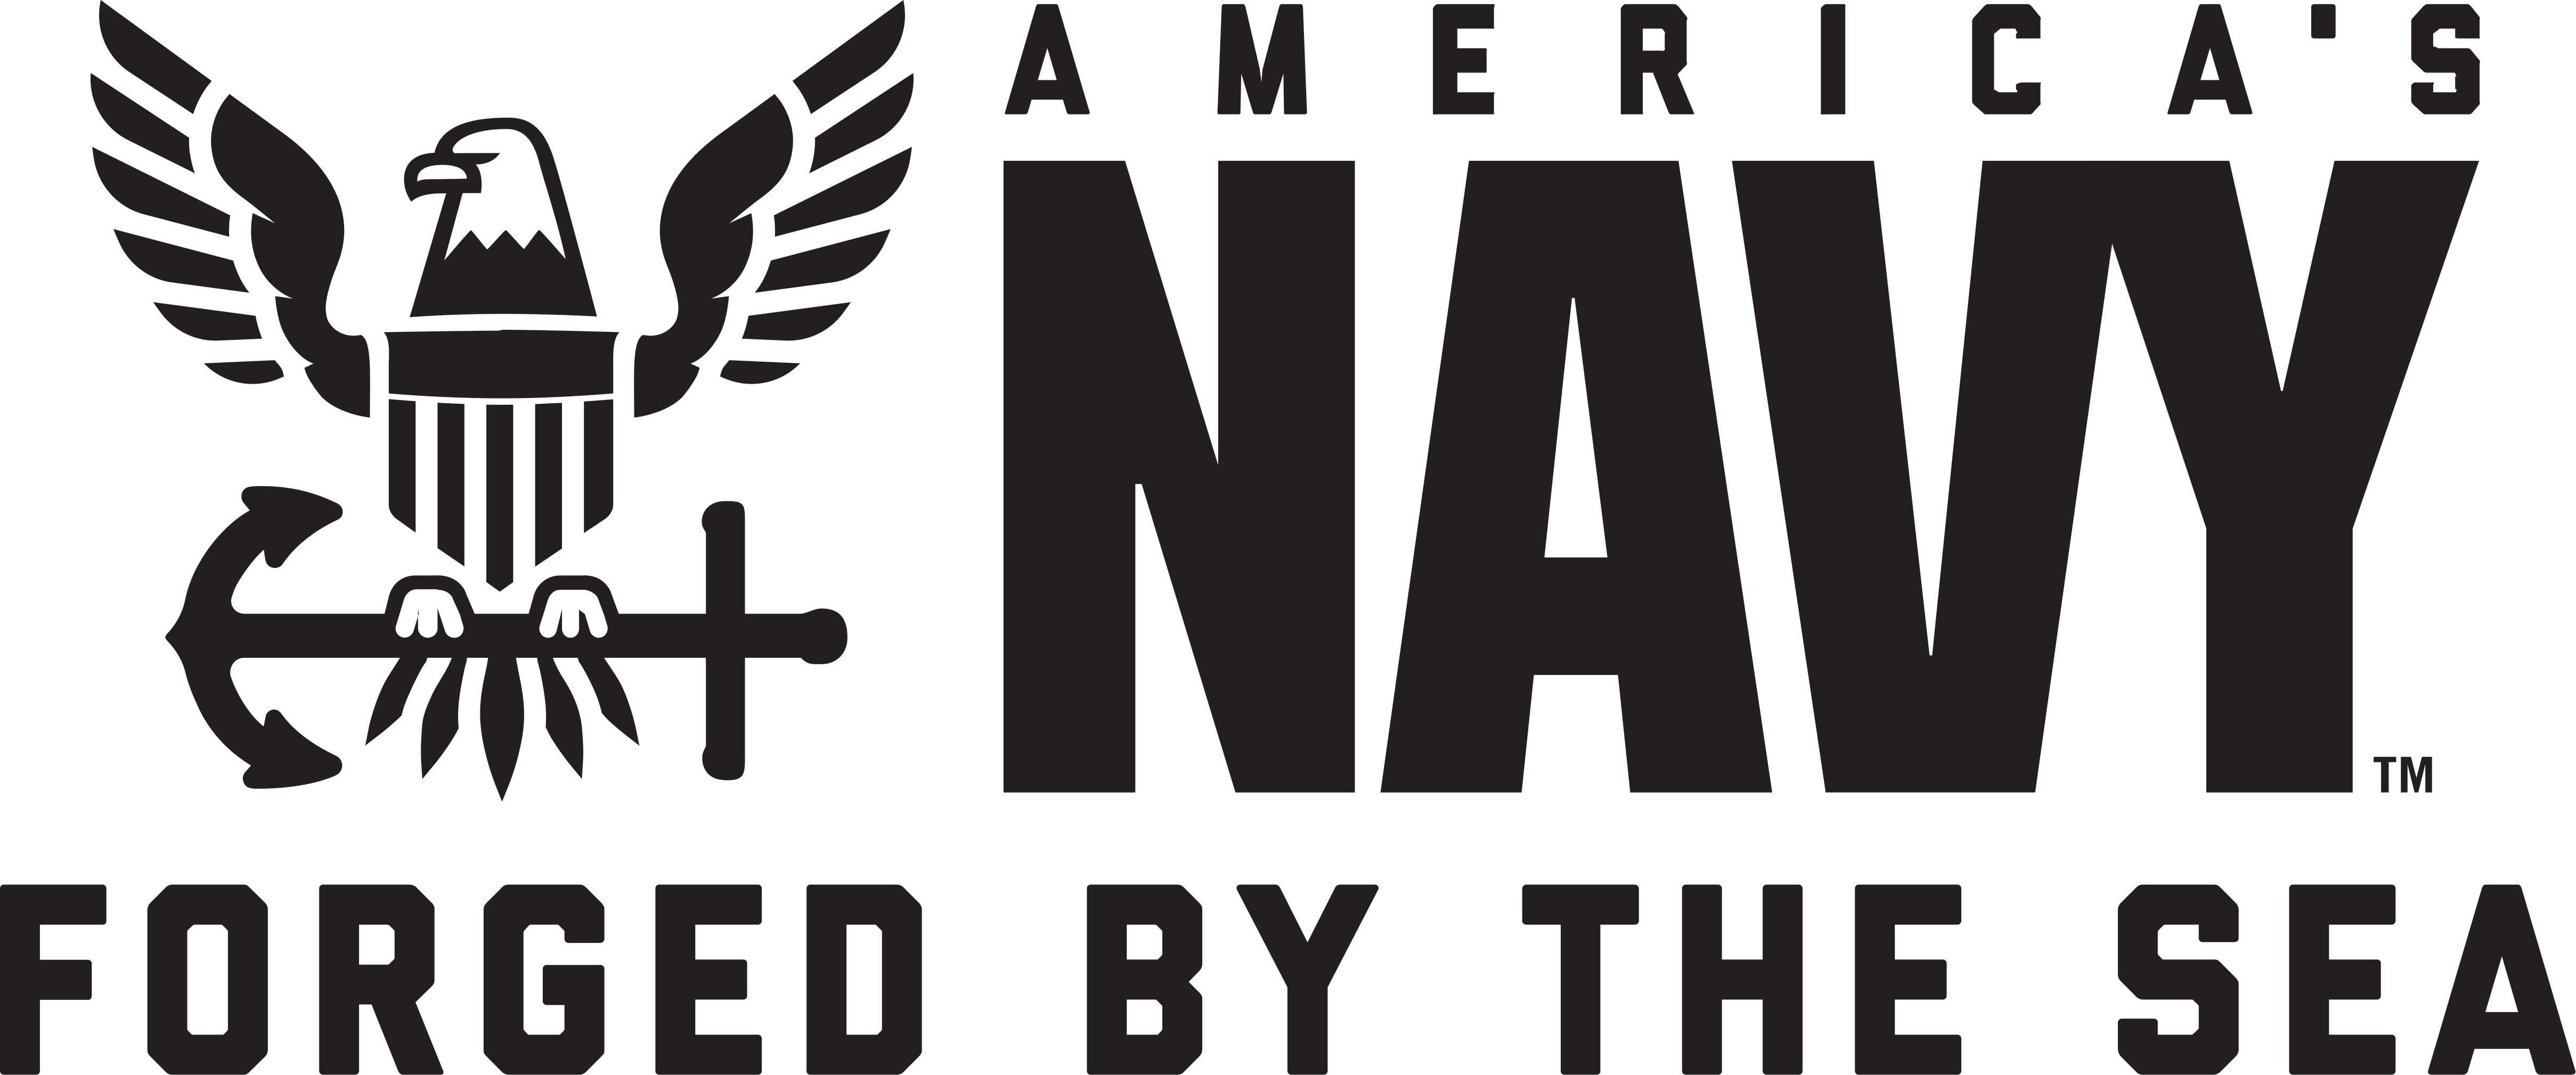 File:United States Navy logo.jpg - Wikipedia